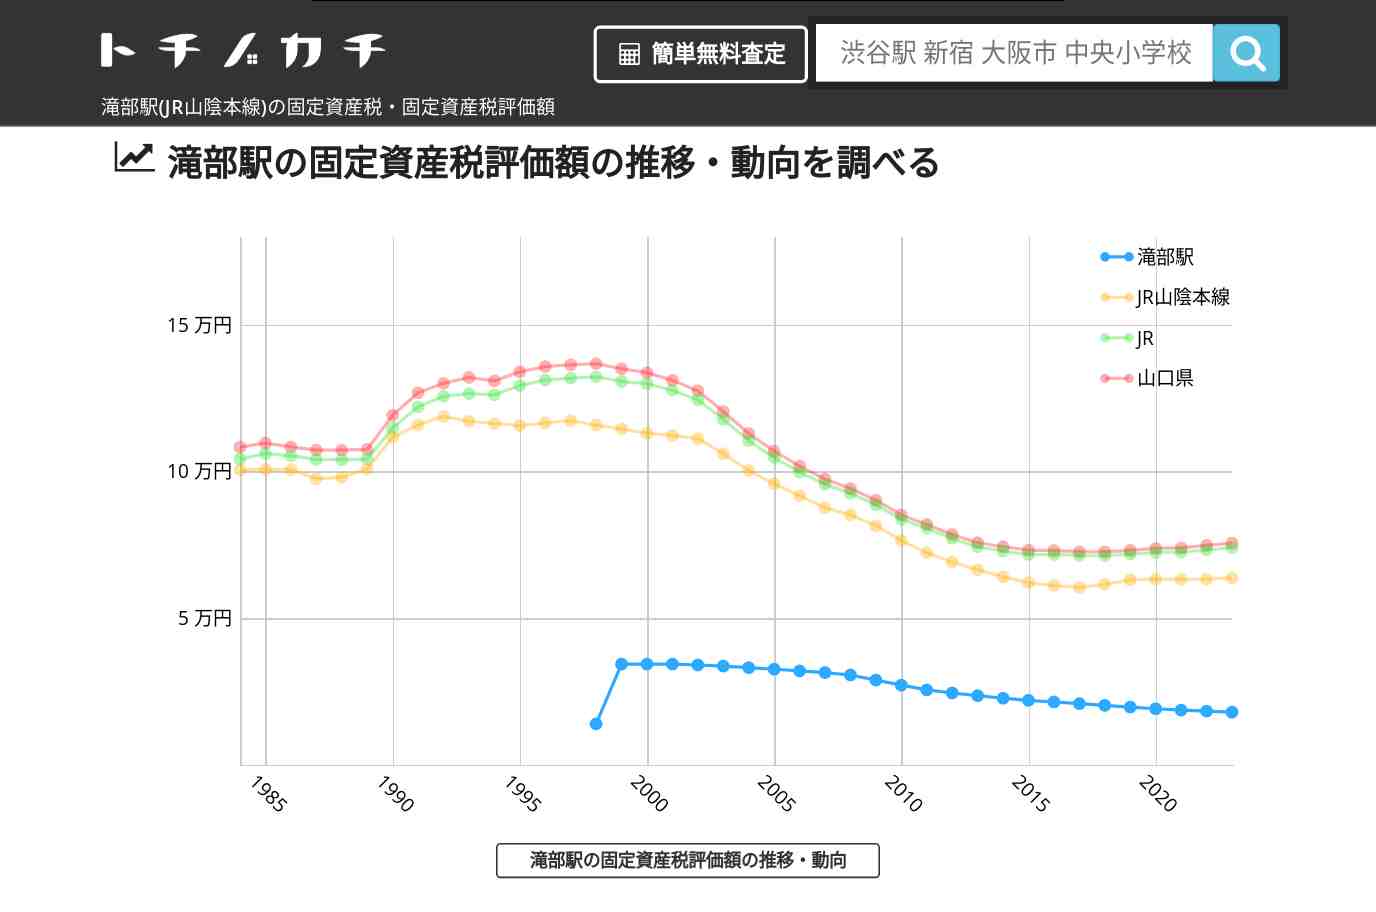 滝部駅(JR山陰本線)の固定資産税・固定資産税評価額 | トチノカチ